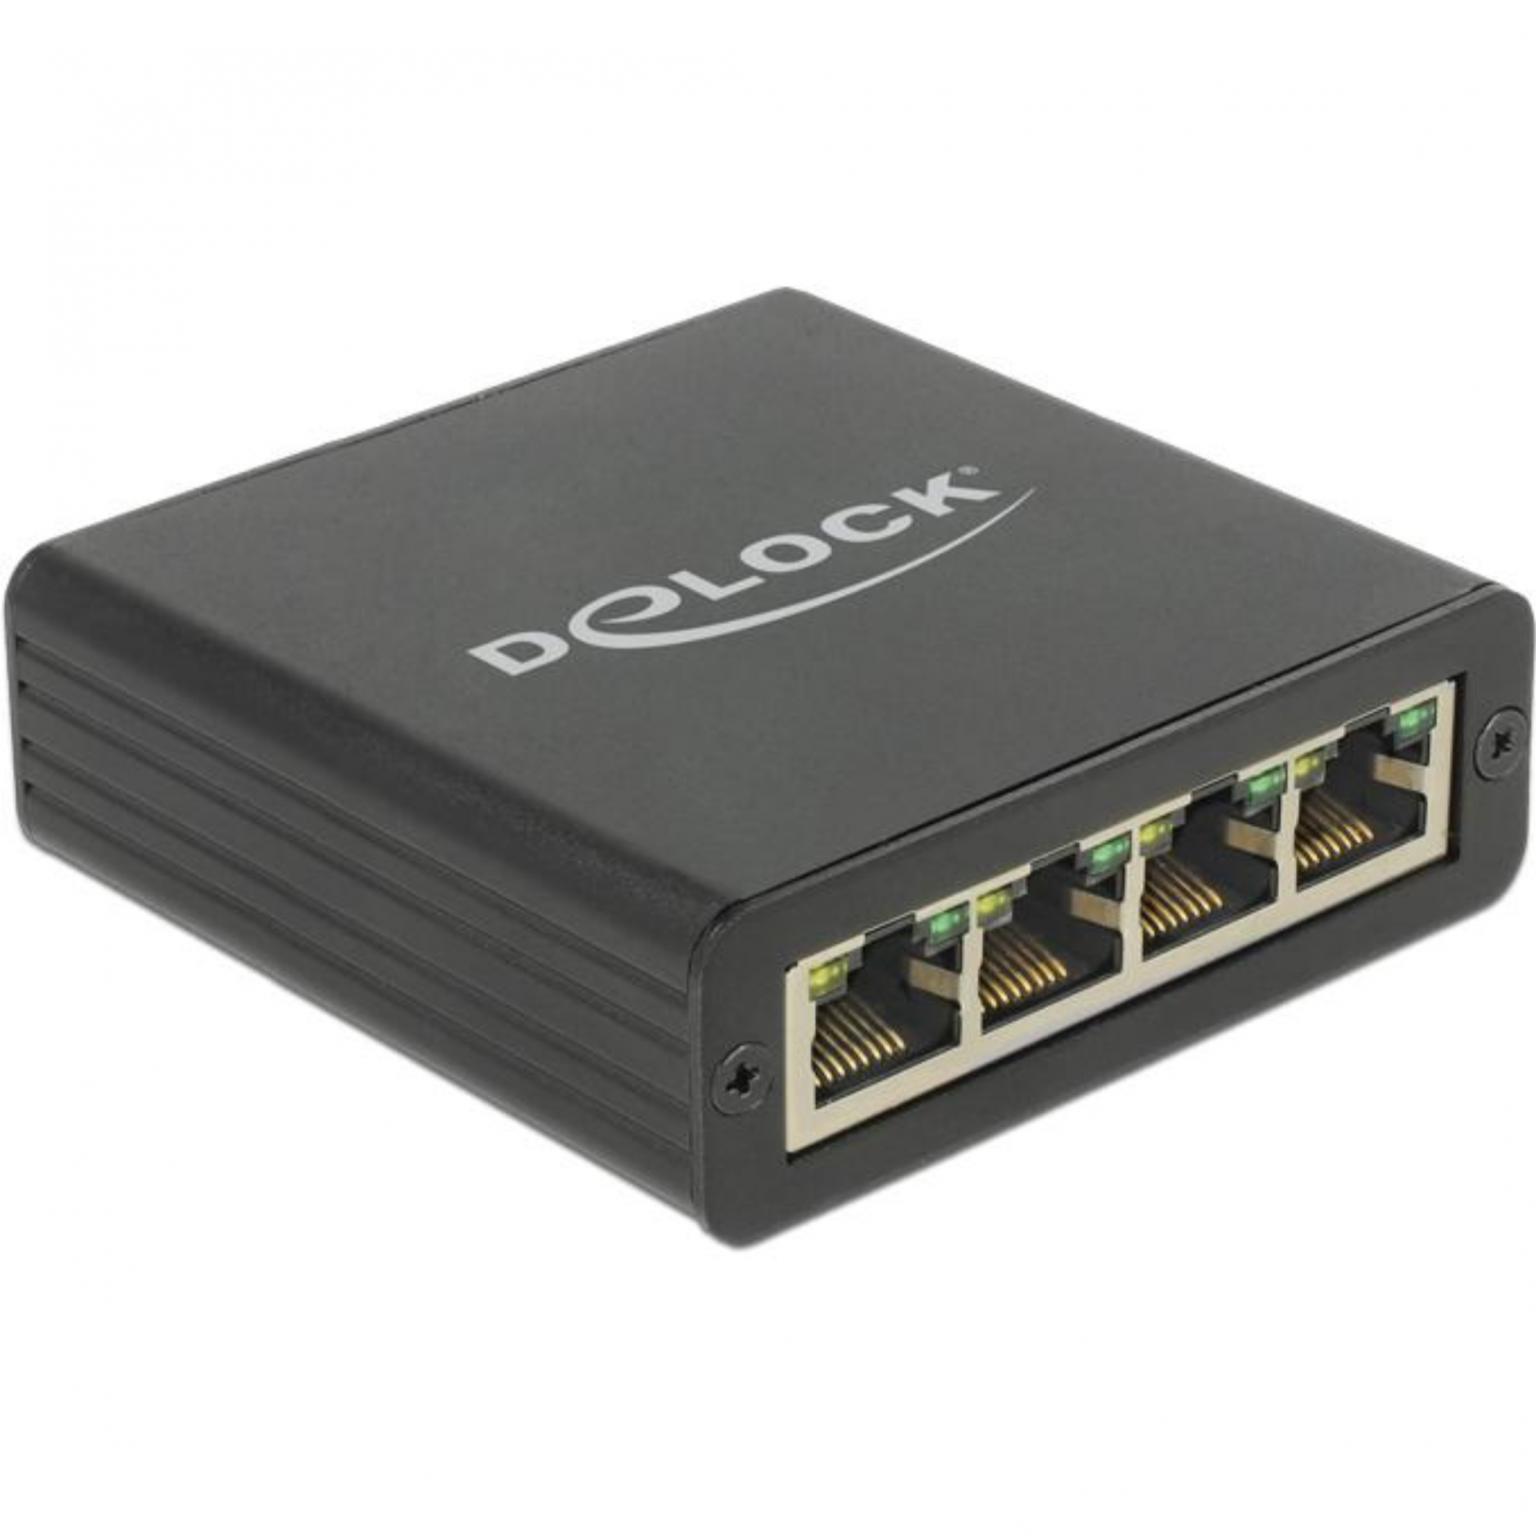 Ethernet adapter USB 3.0 - Delock